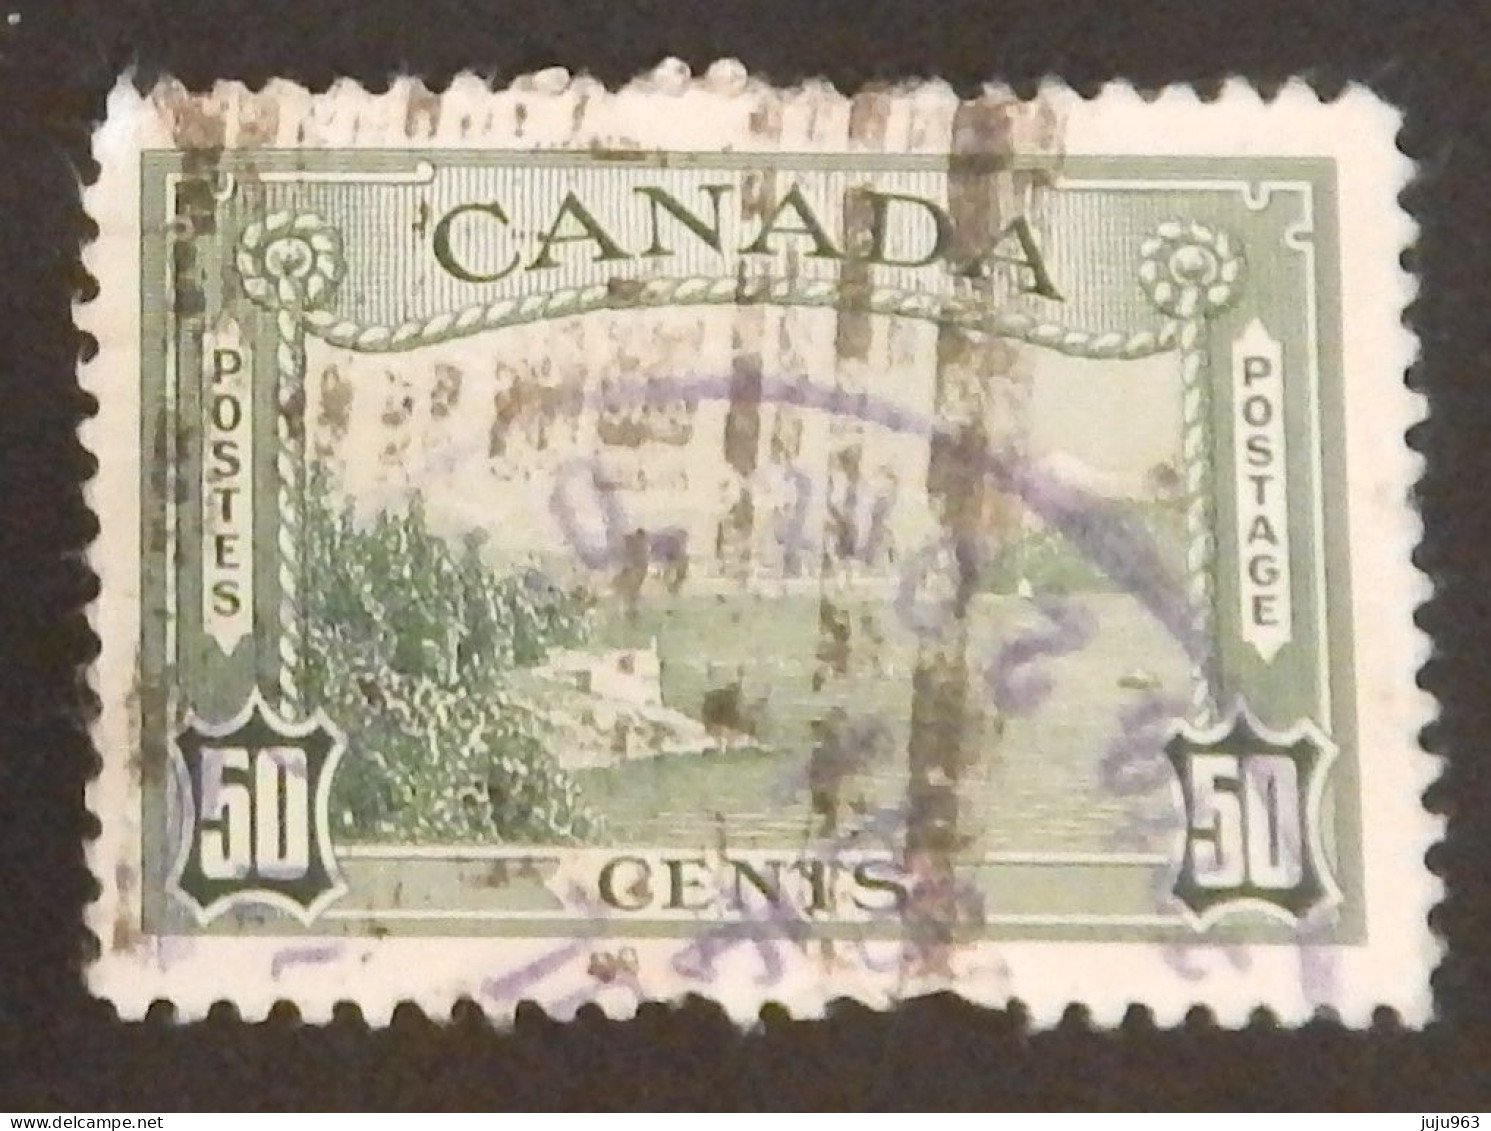 CANADA YT 200 OBLITERE "PORT DE VANCOUVER" ANNÉE 1938 - Used Stamps